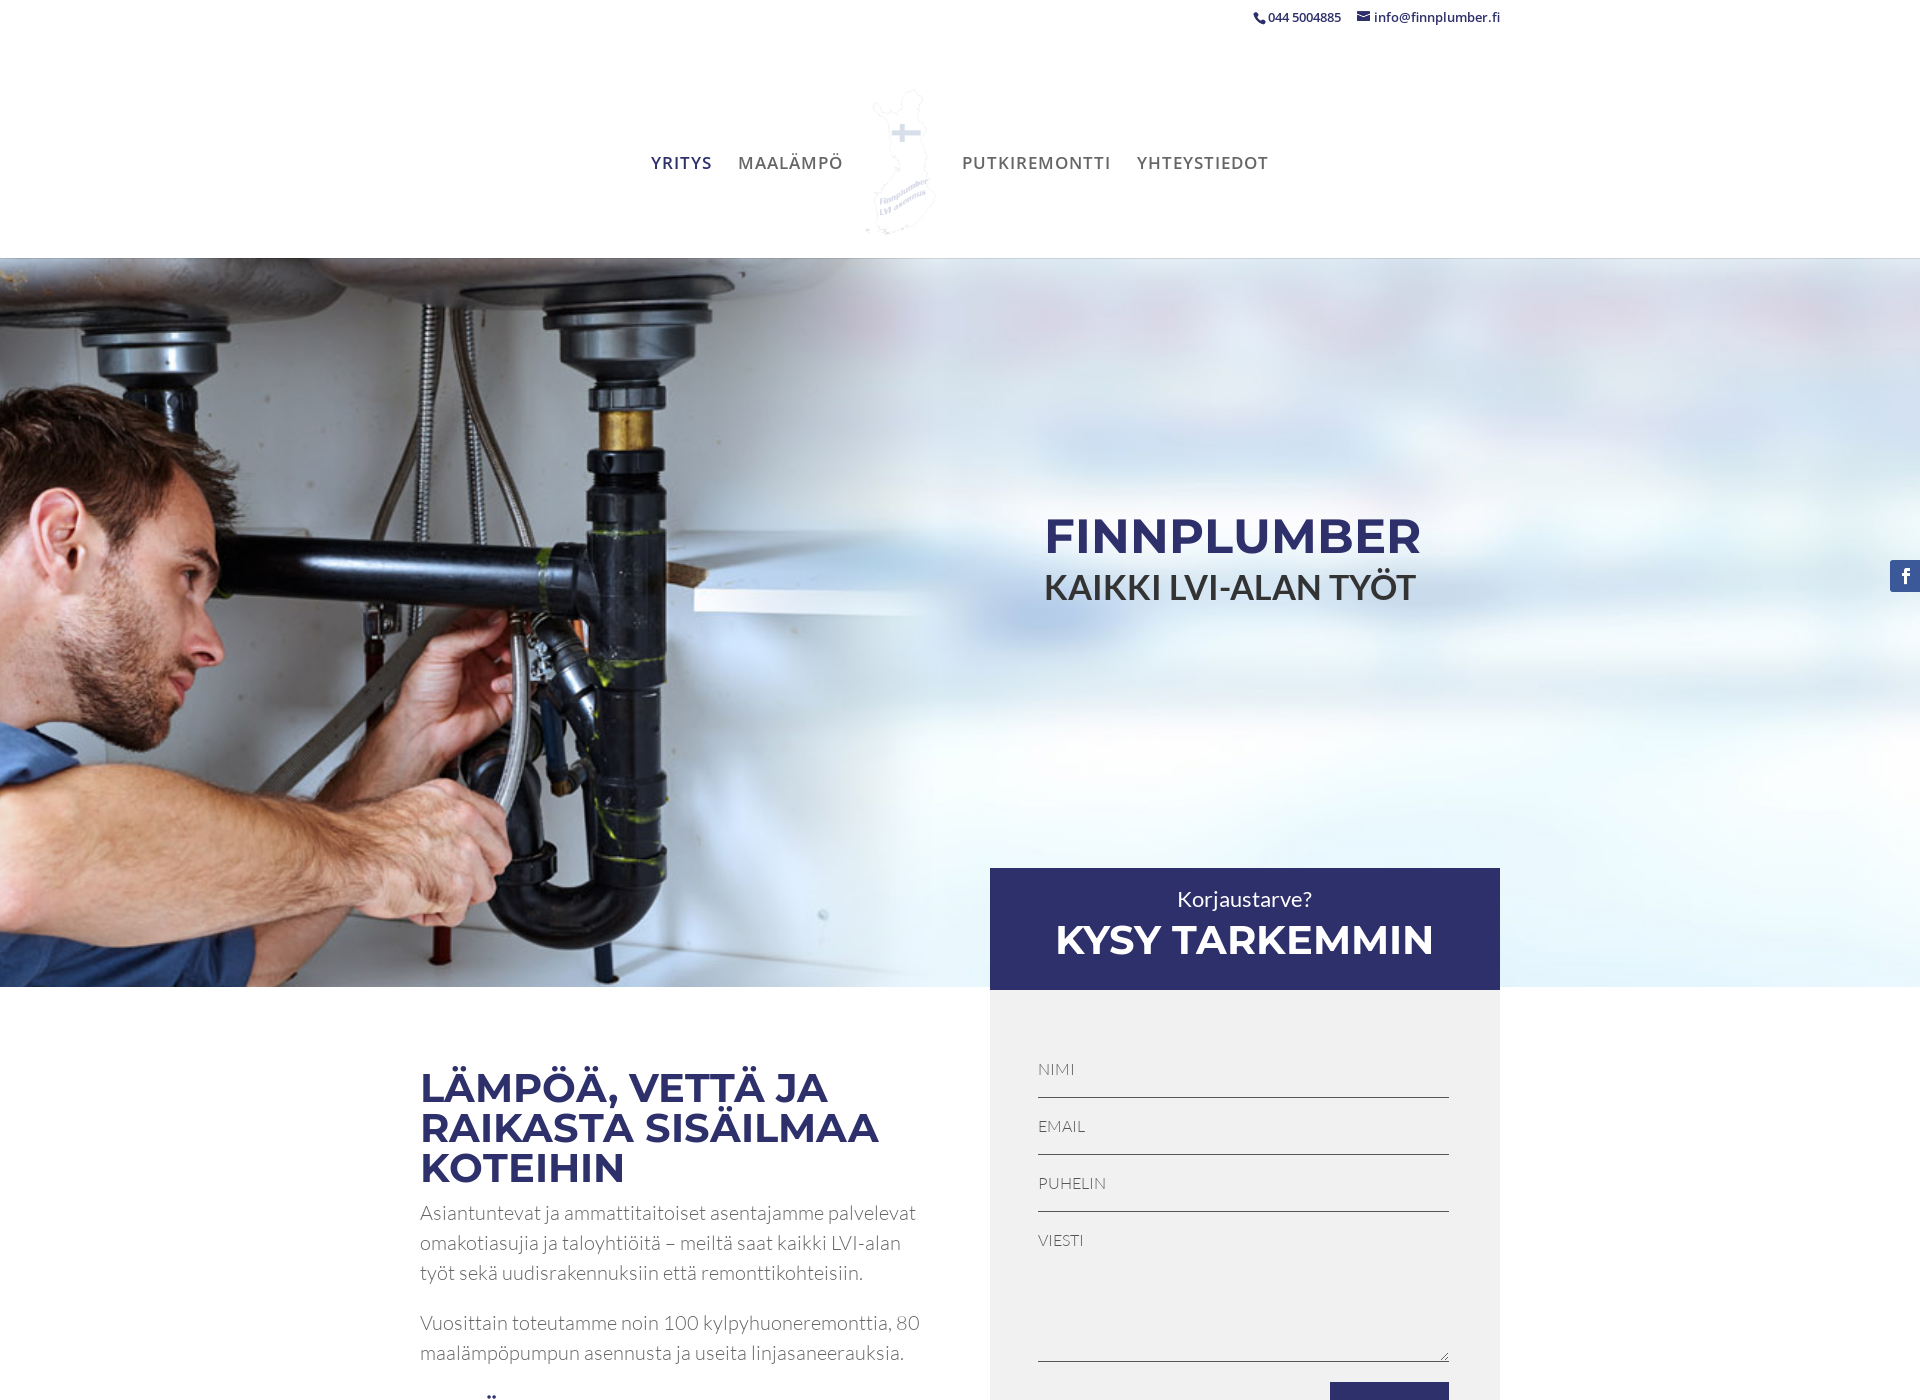 Näyttökuva finnplumber.fi